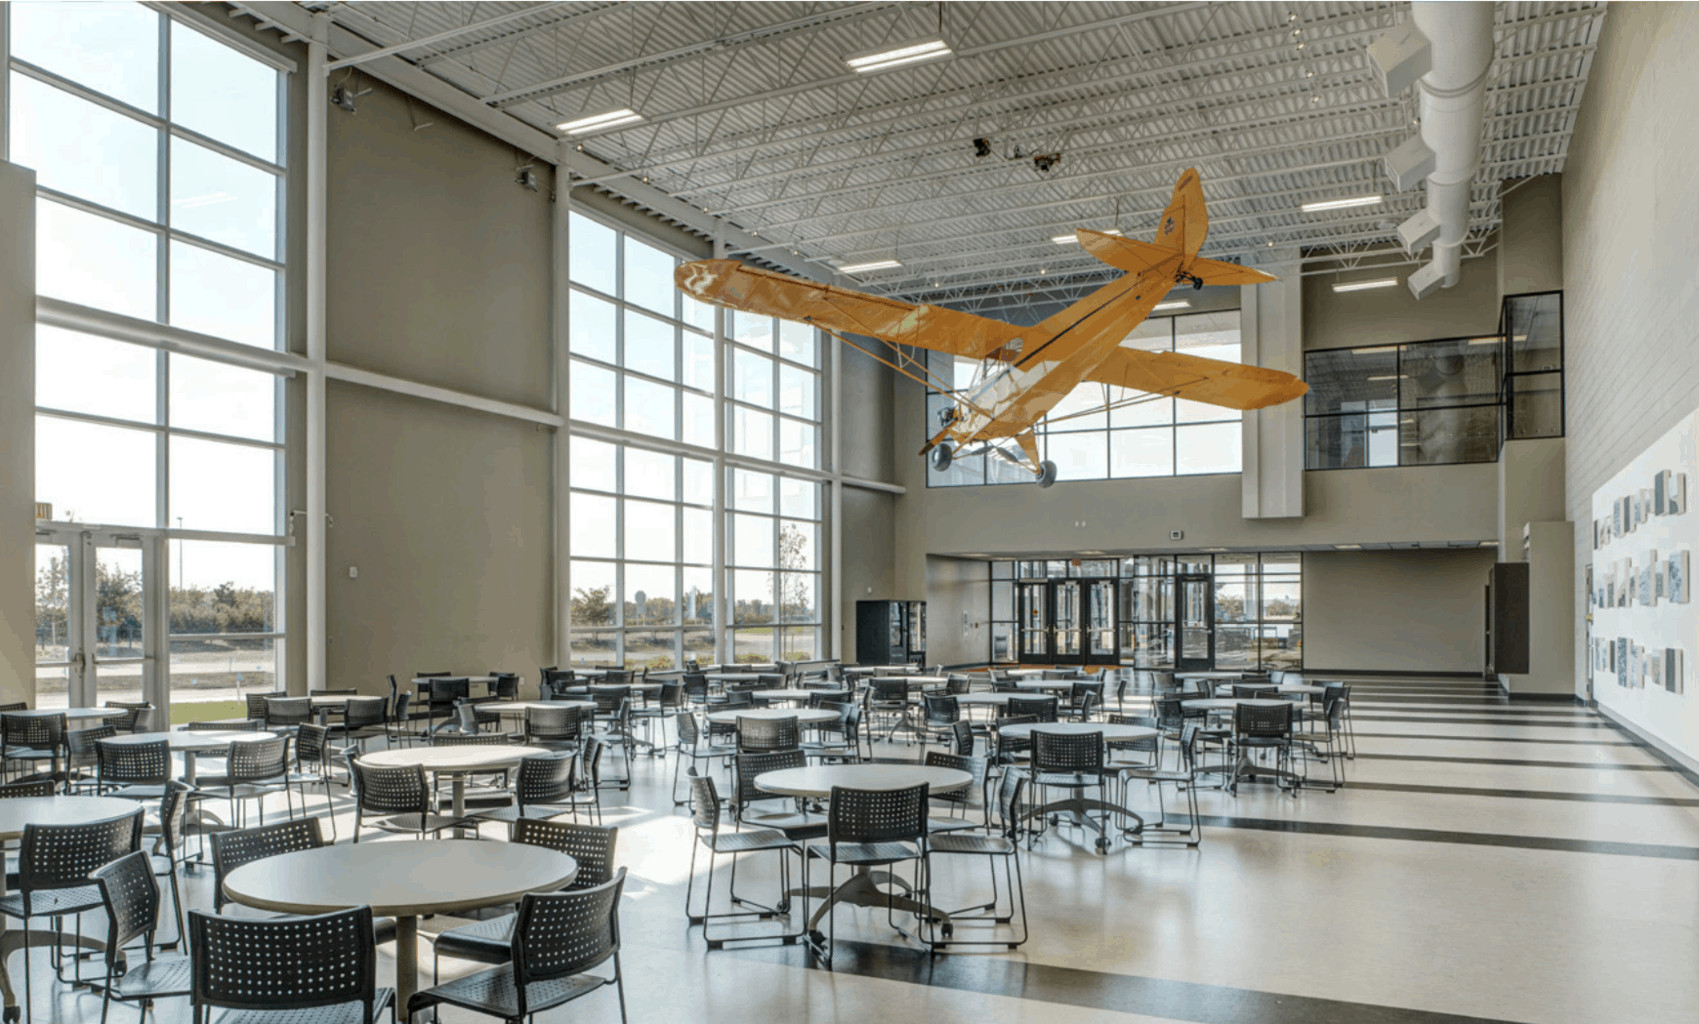 Interior shot of the West Michigan Aviation Academy